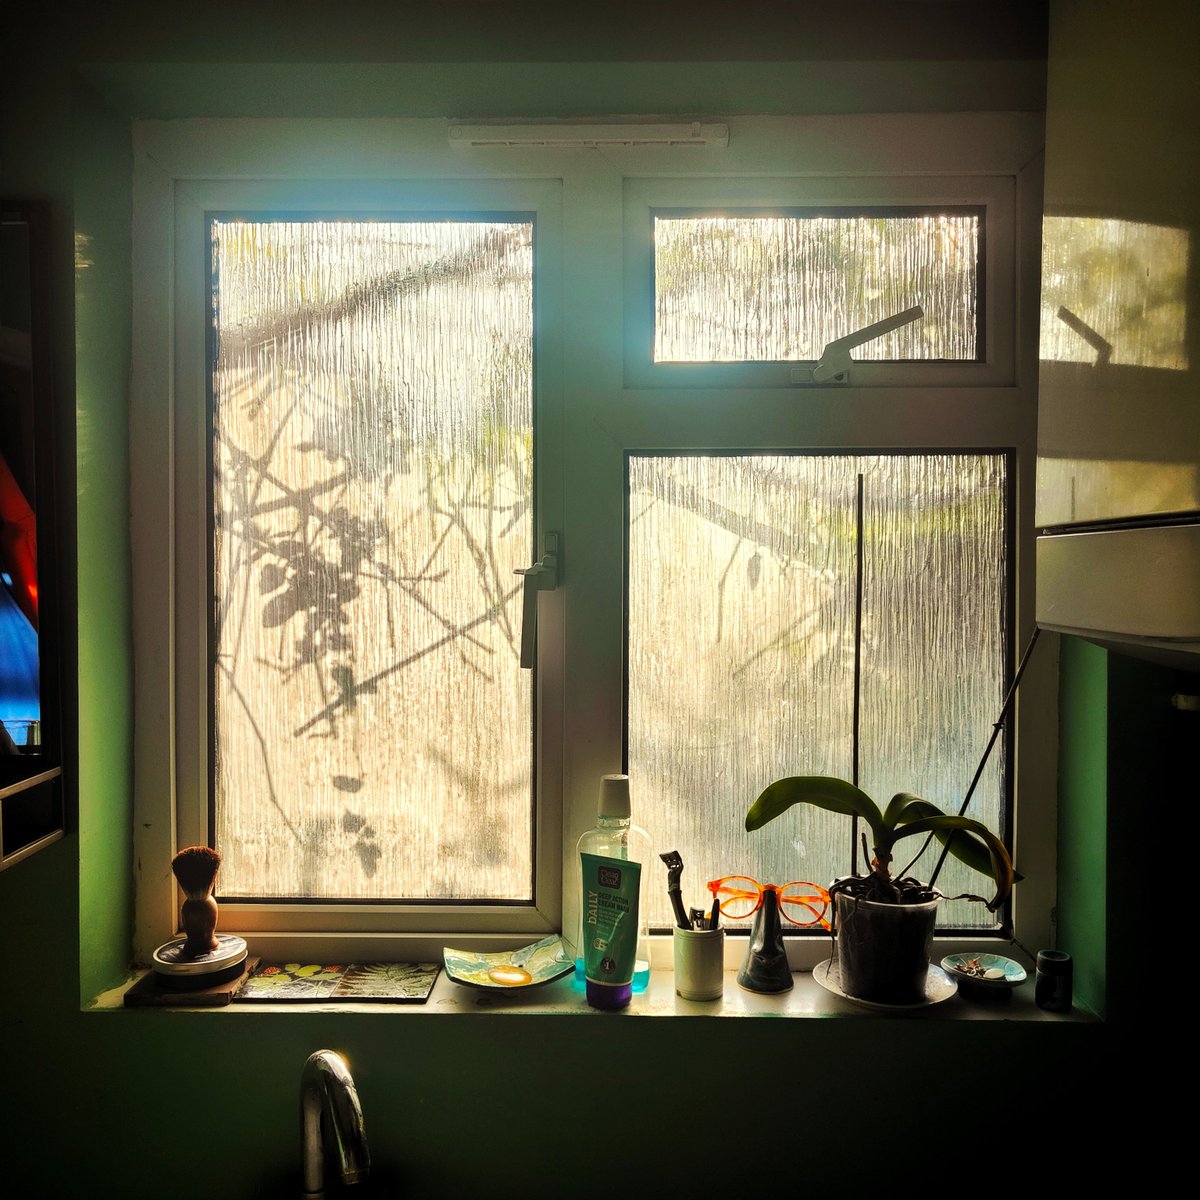 Morning Bathroom Window with Vine Shadows